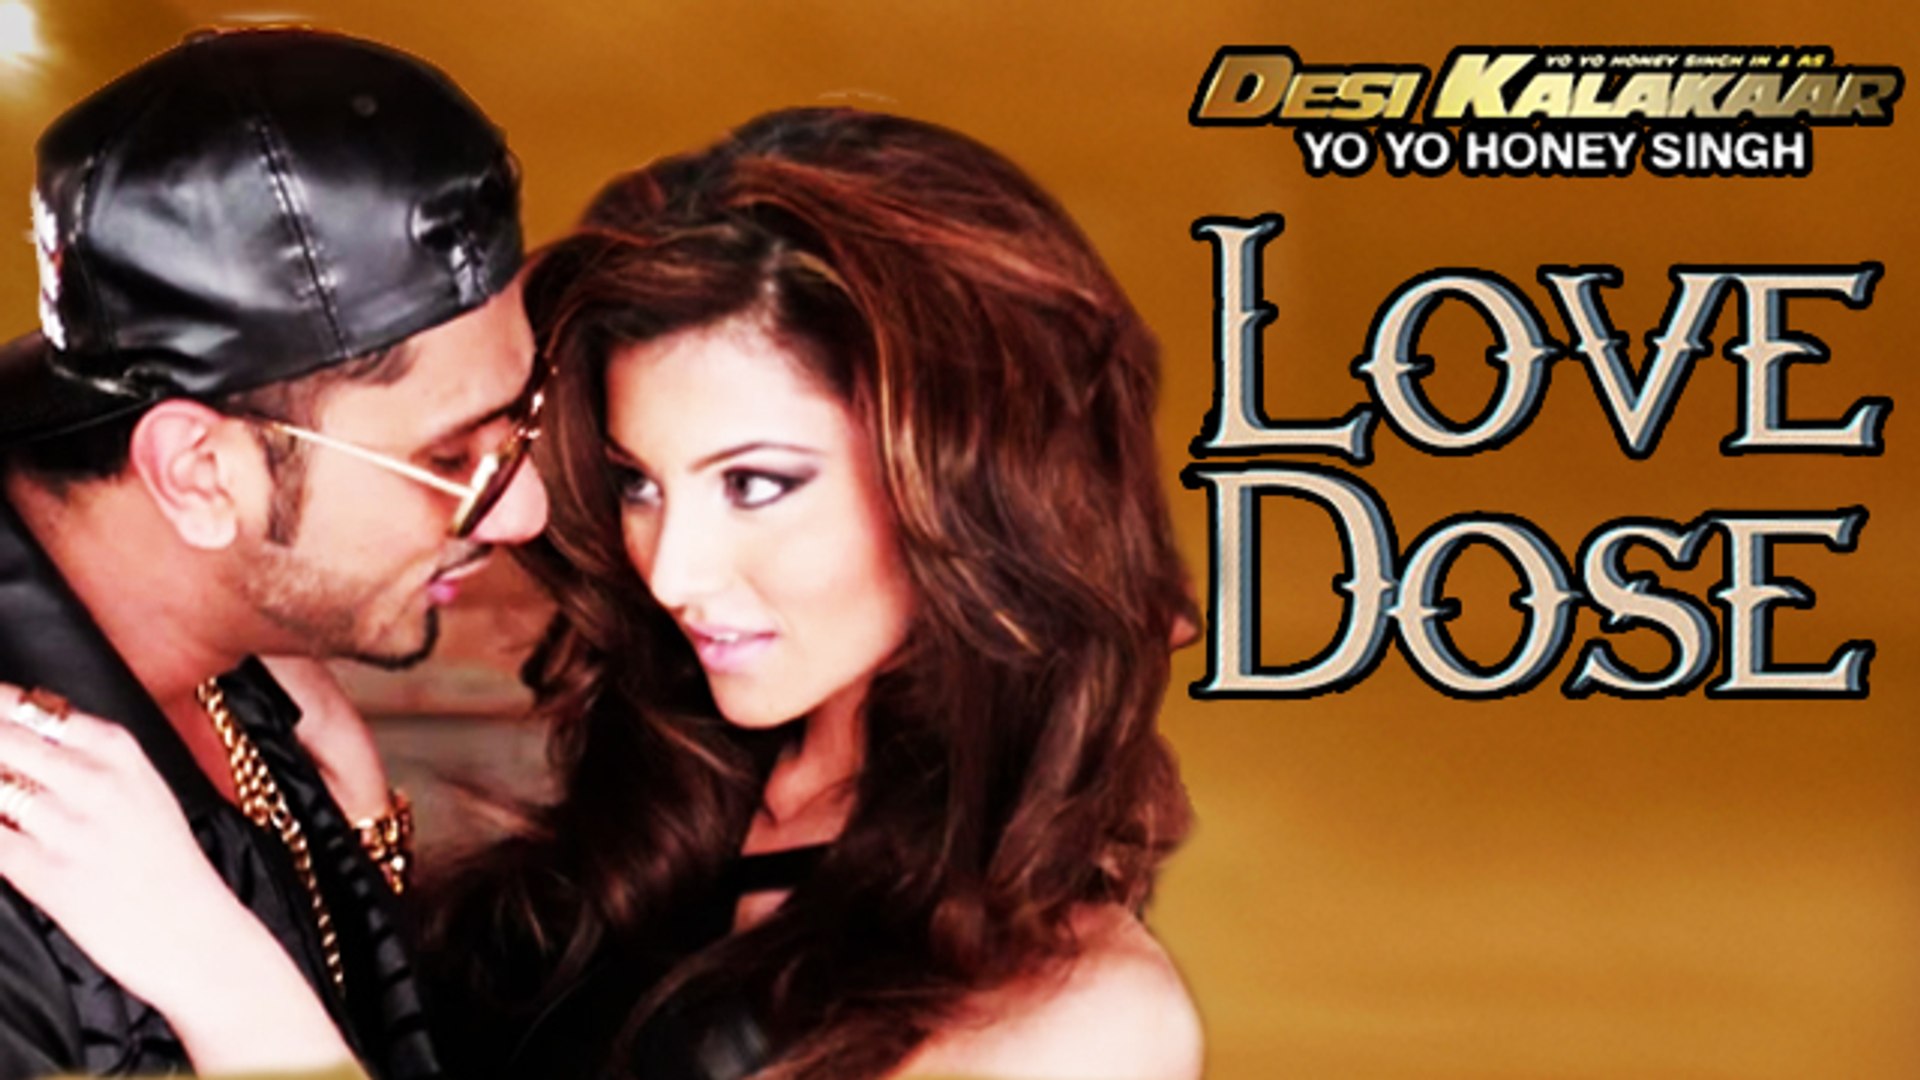 Love dose song mp3 free download dailymaza